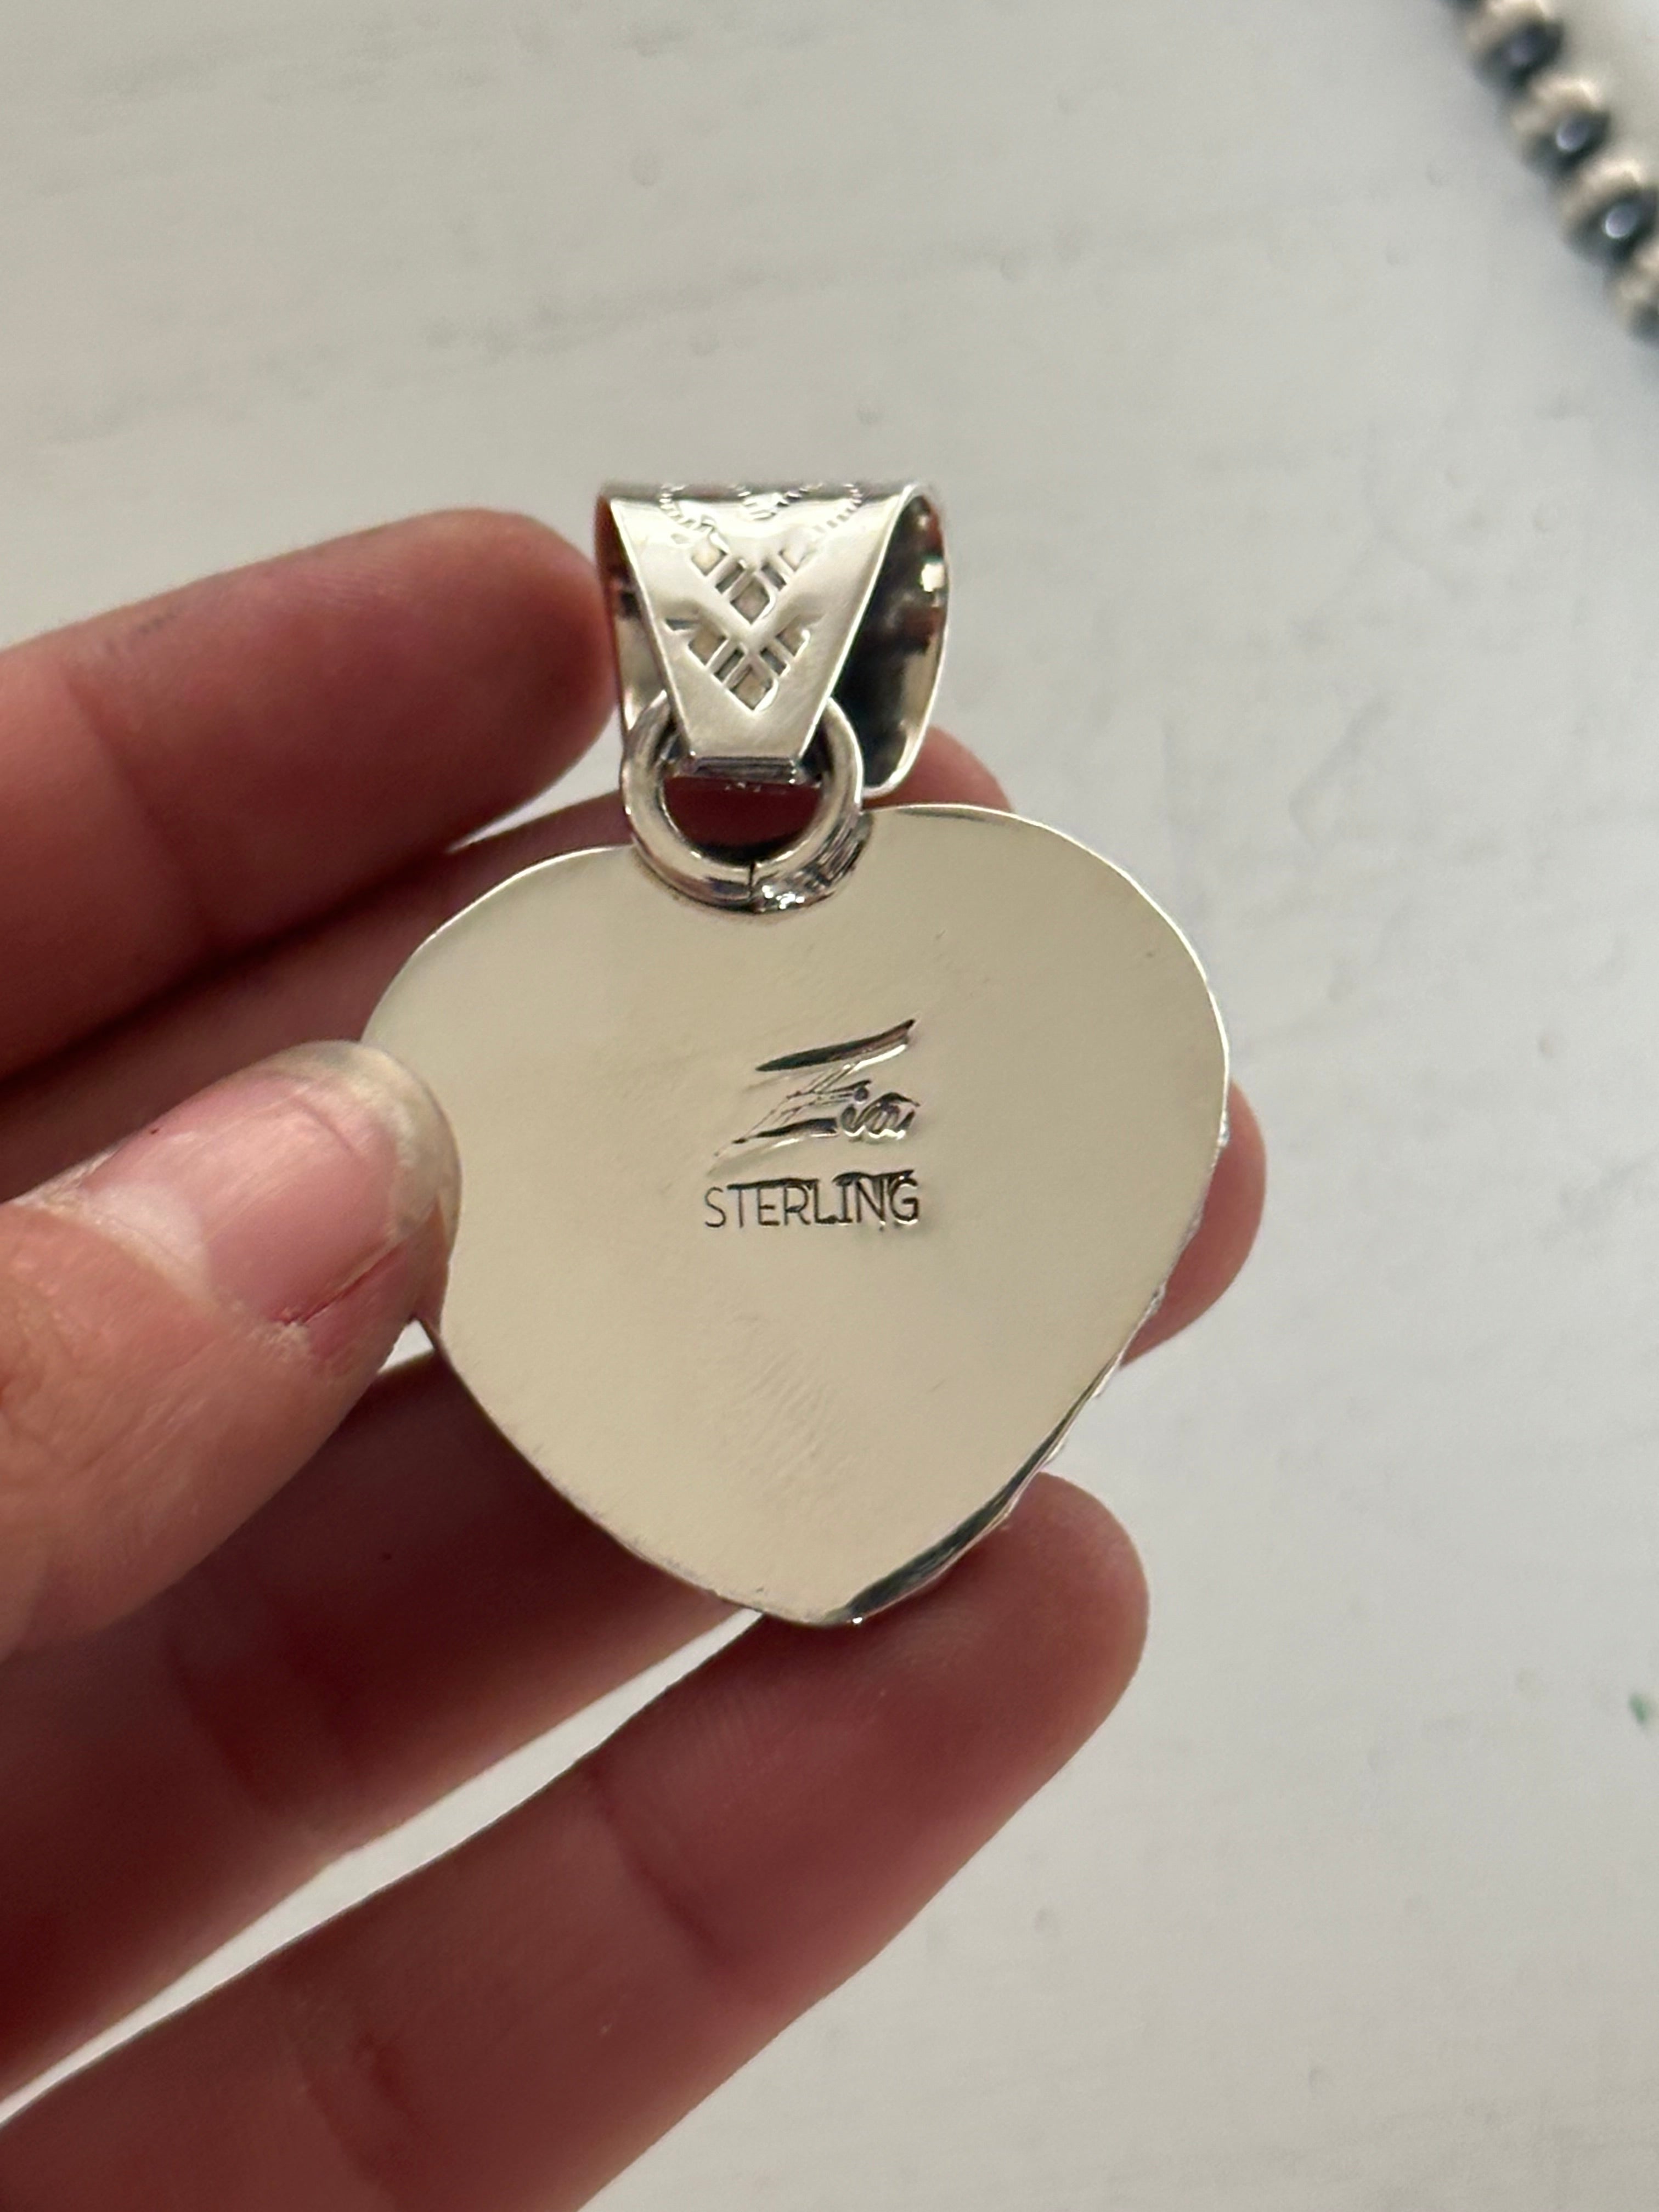 Tony Yazzie Kingman Turquoise & Sterling Silver Heart Pendant